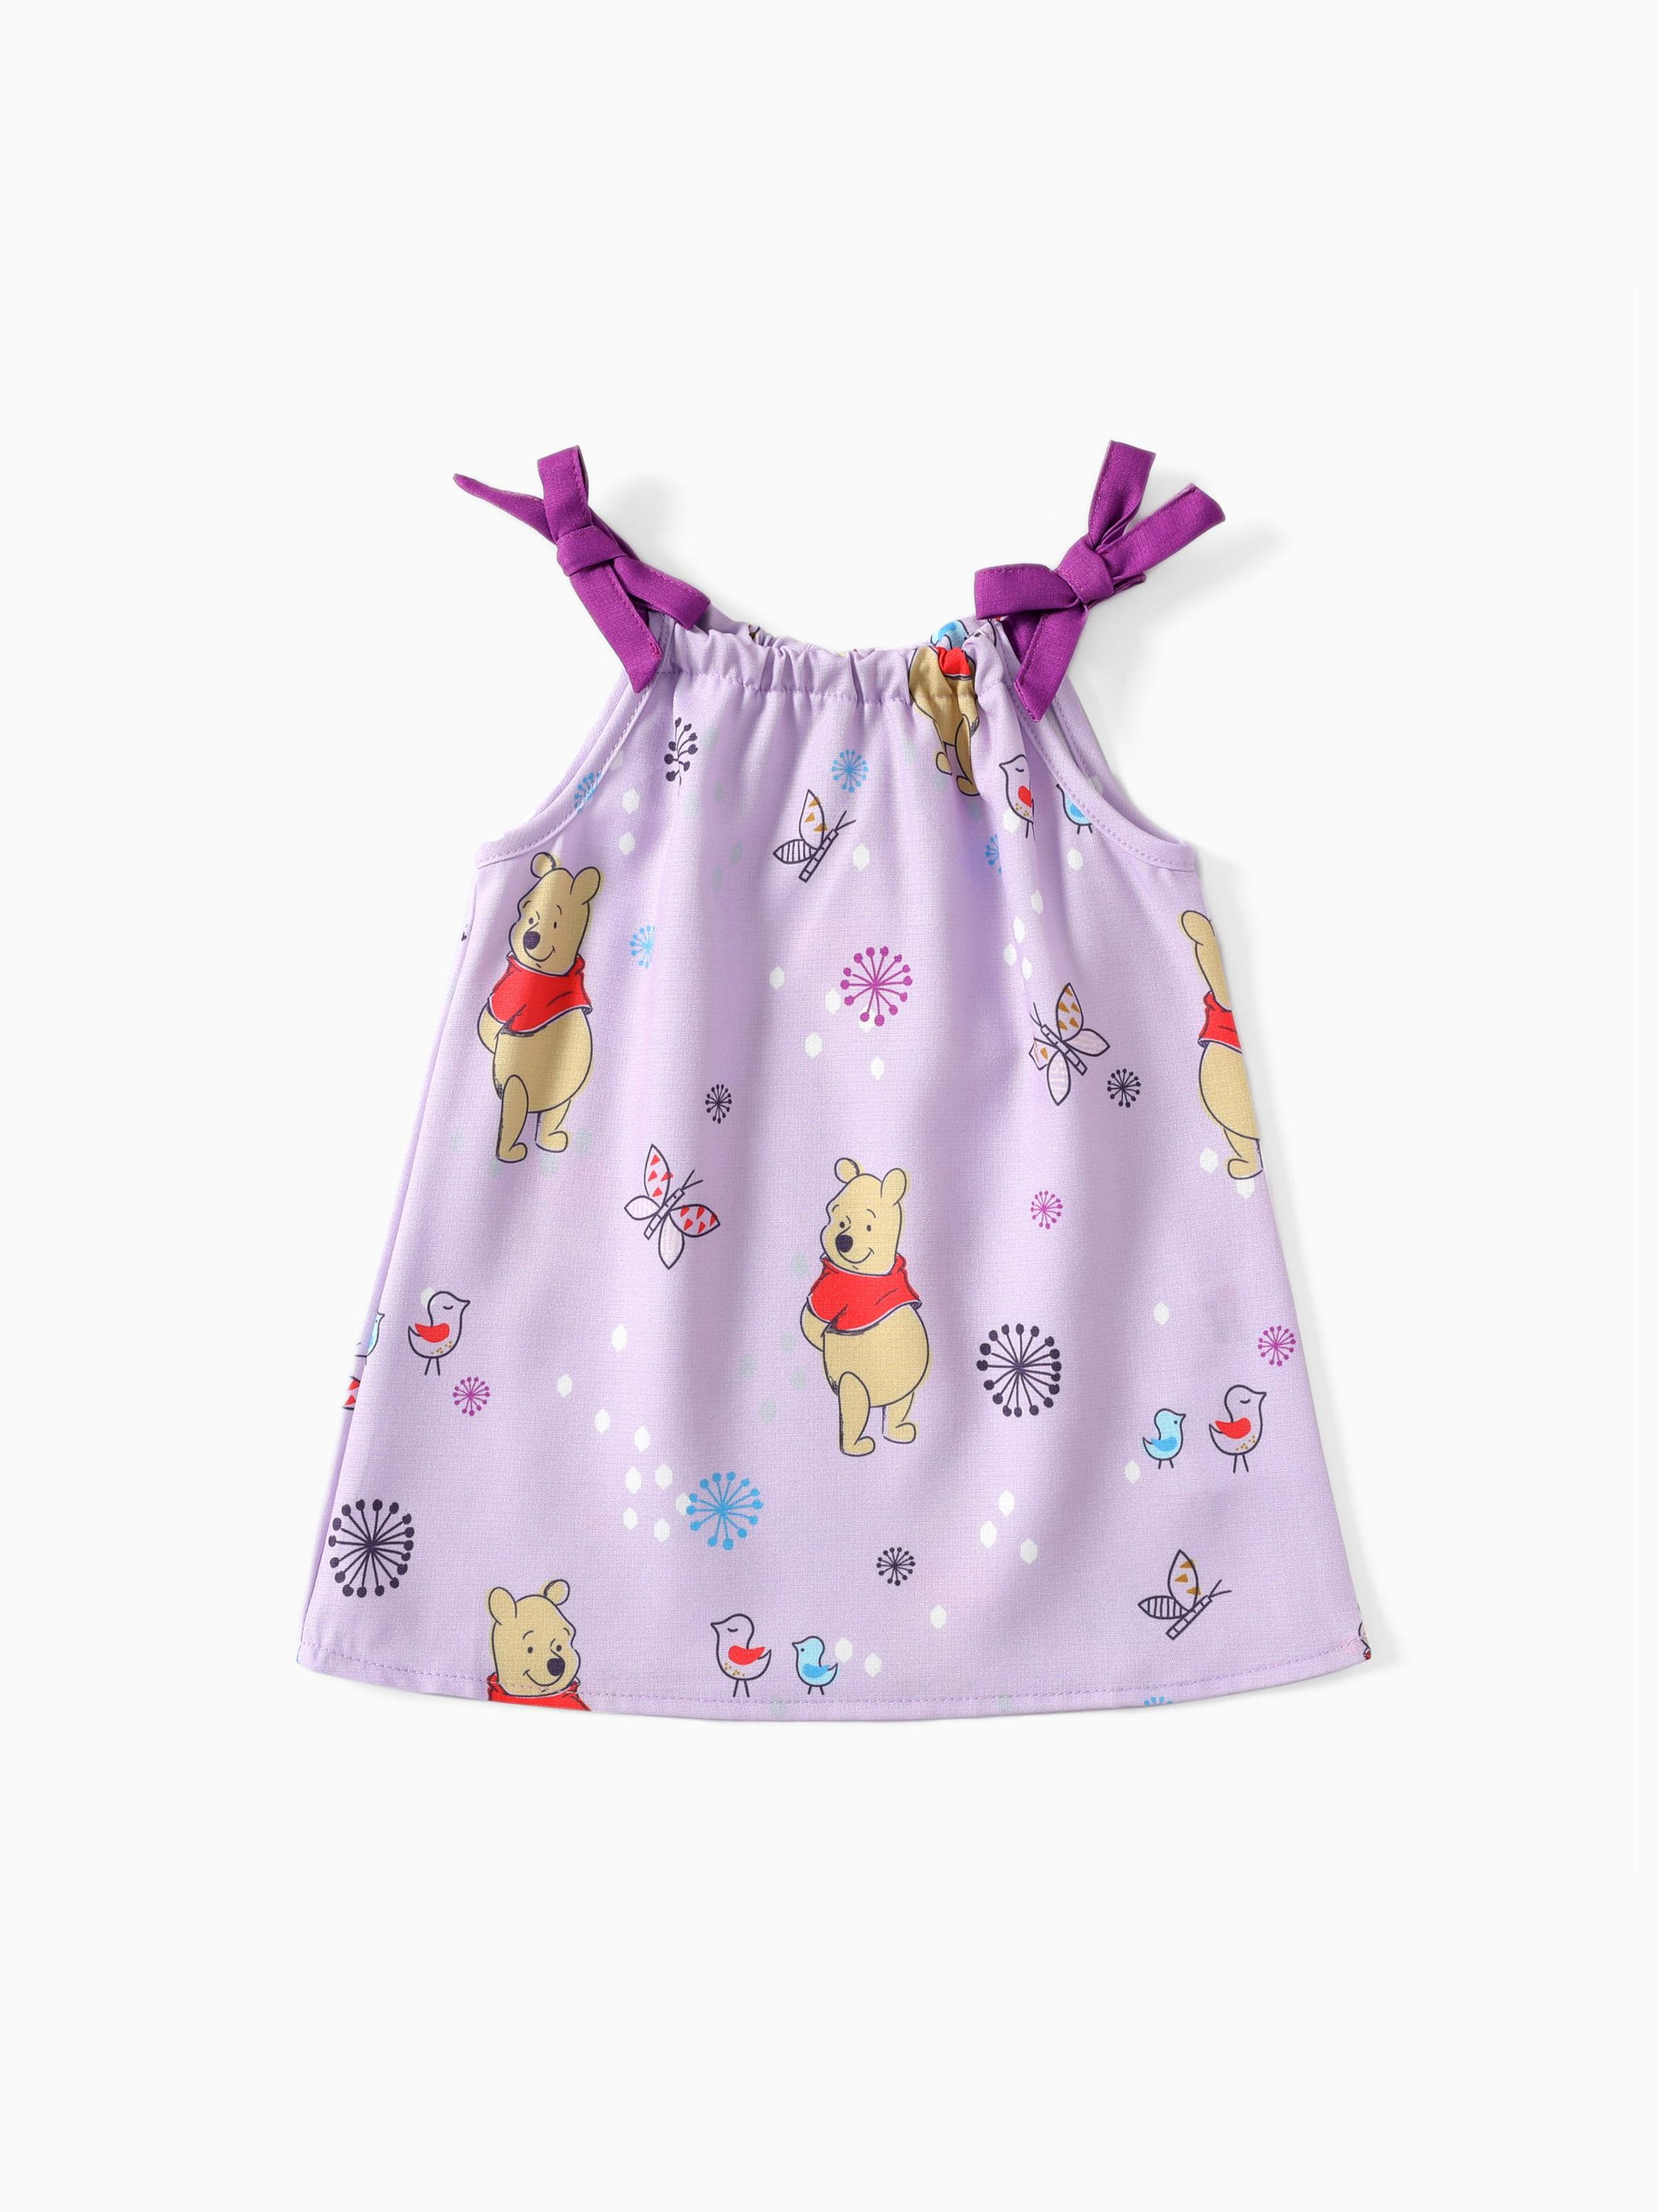 

Disney Winnie the Pooh Baby Girls 1pc Character Bowknot Floral Print Sleeveless Dress